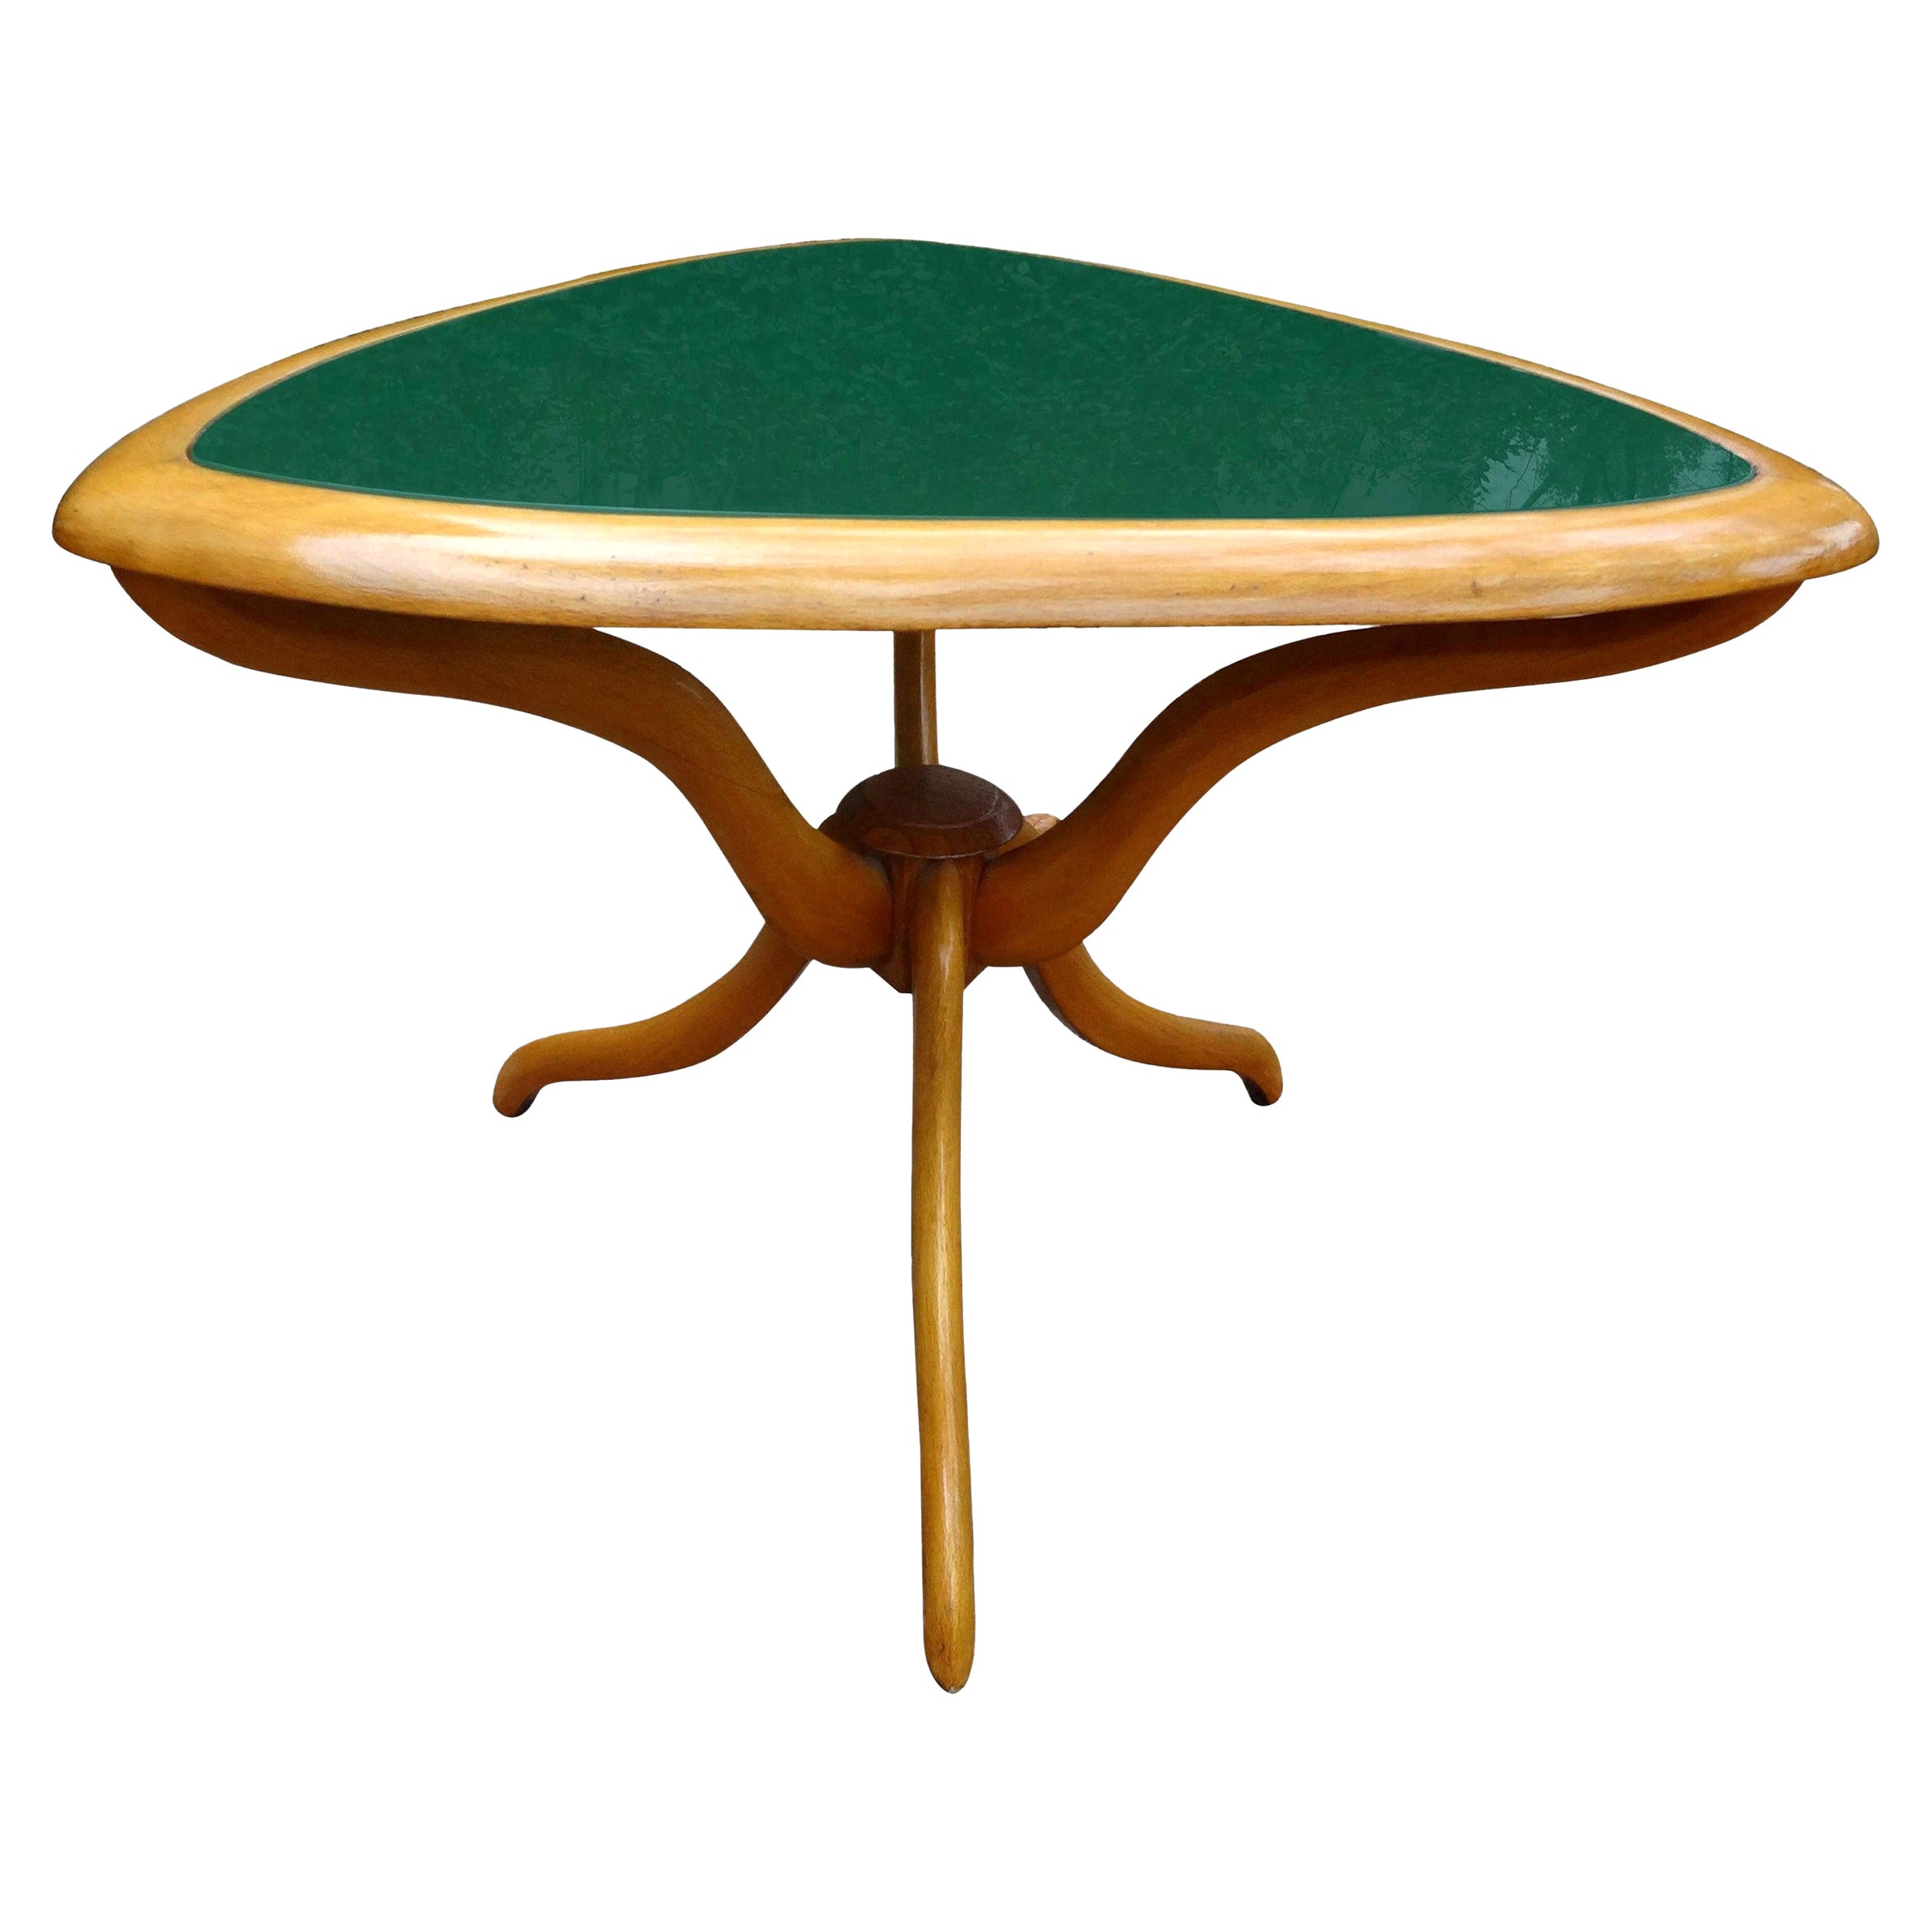 Italian Modern Gio Ponti Inspired Table For Sale